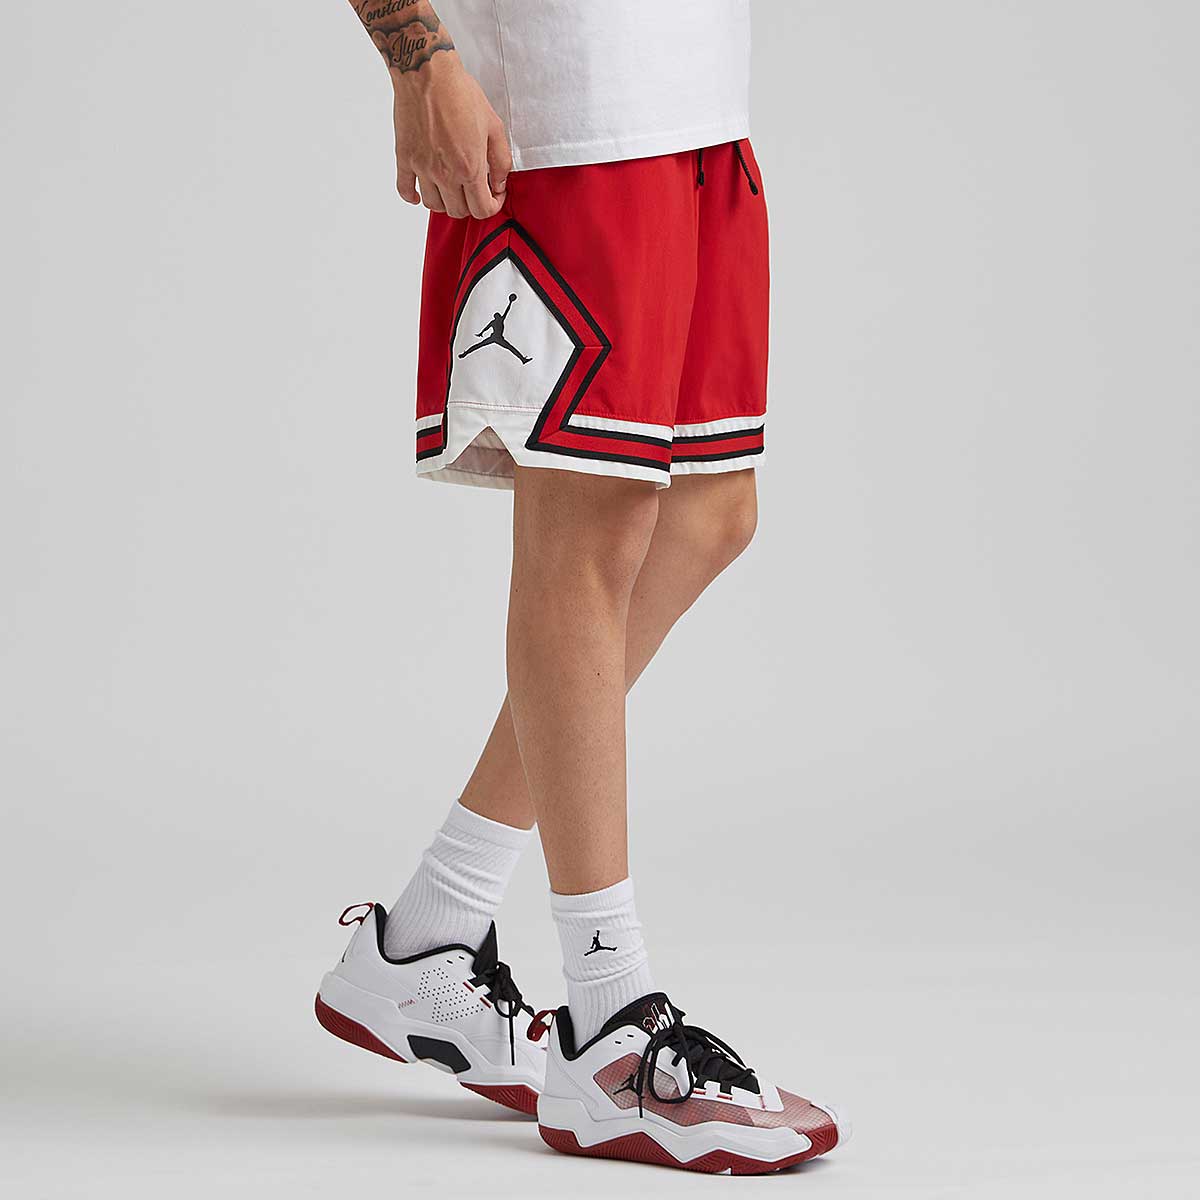 Chicago Bulls Men's Jus Don Red or Pinstripe Basketball Shorts